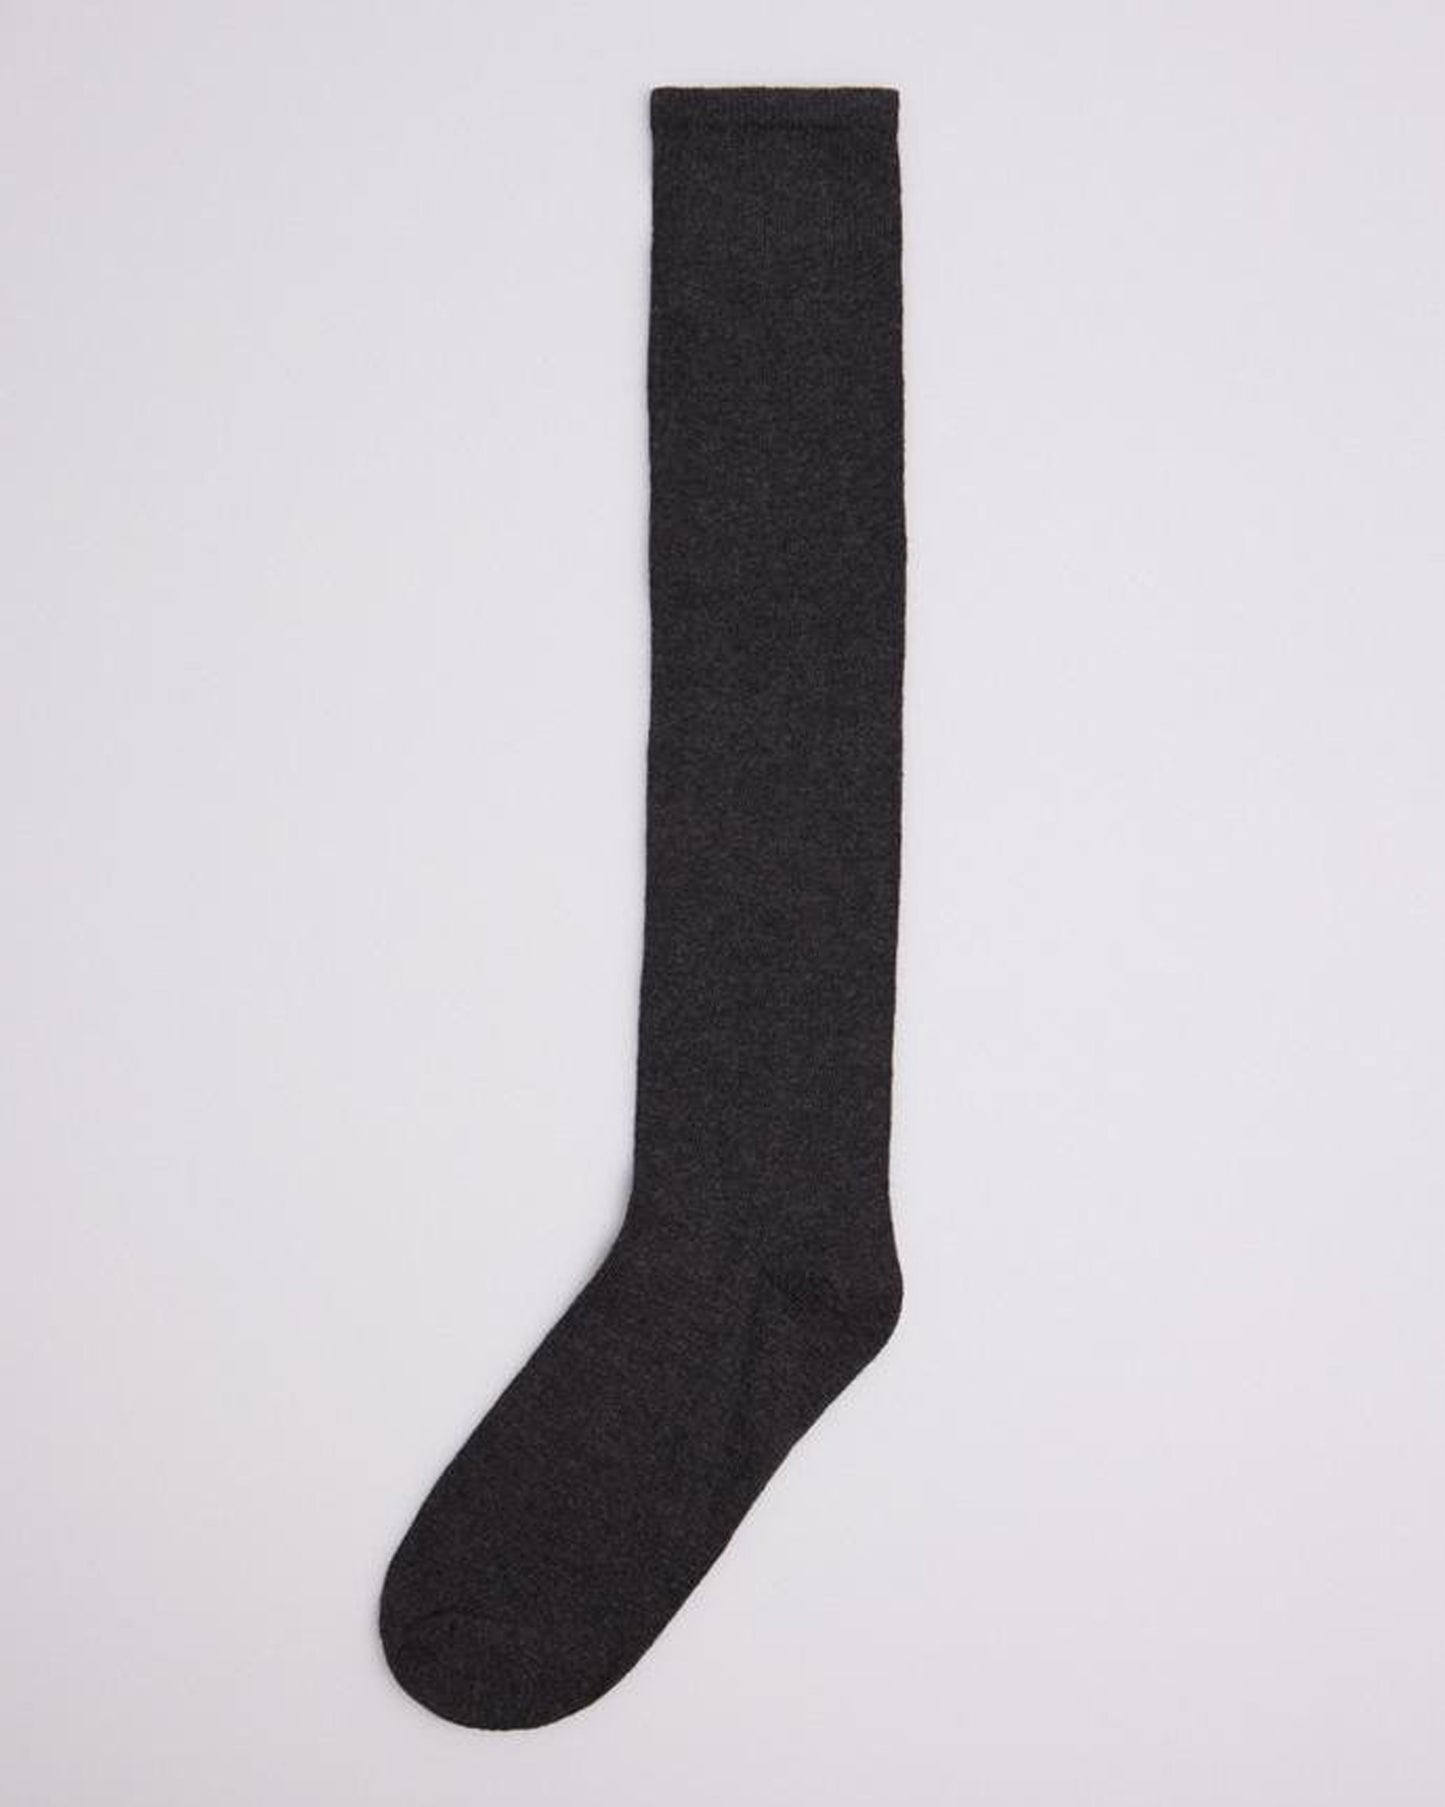 Ysabel Mora 12374 Cotton Knee-Highs - Dark grey cotton knee-high socks with an elasticated comfort cuff, flat toe seams and shaped heel.